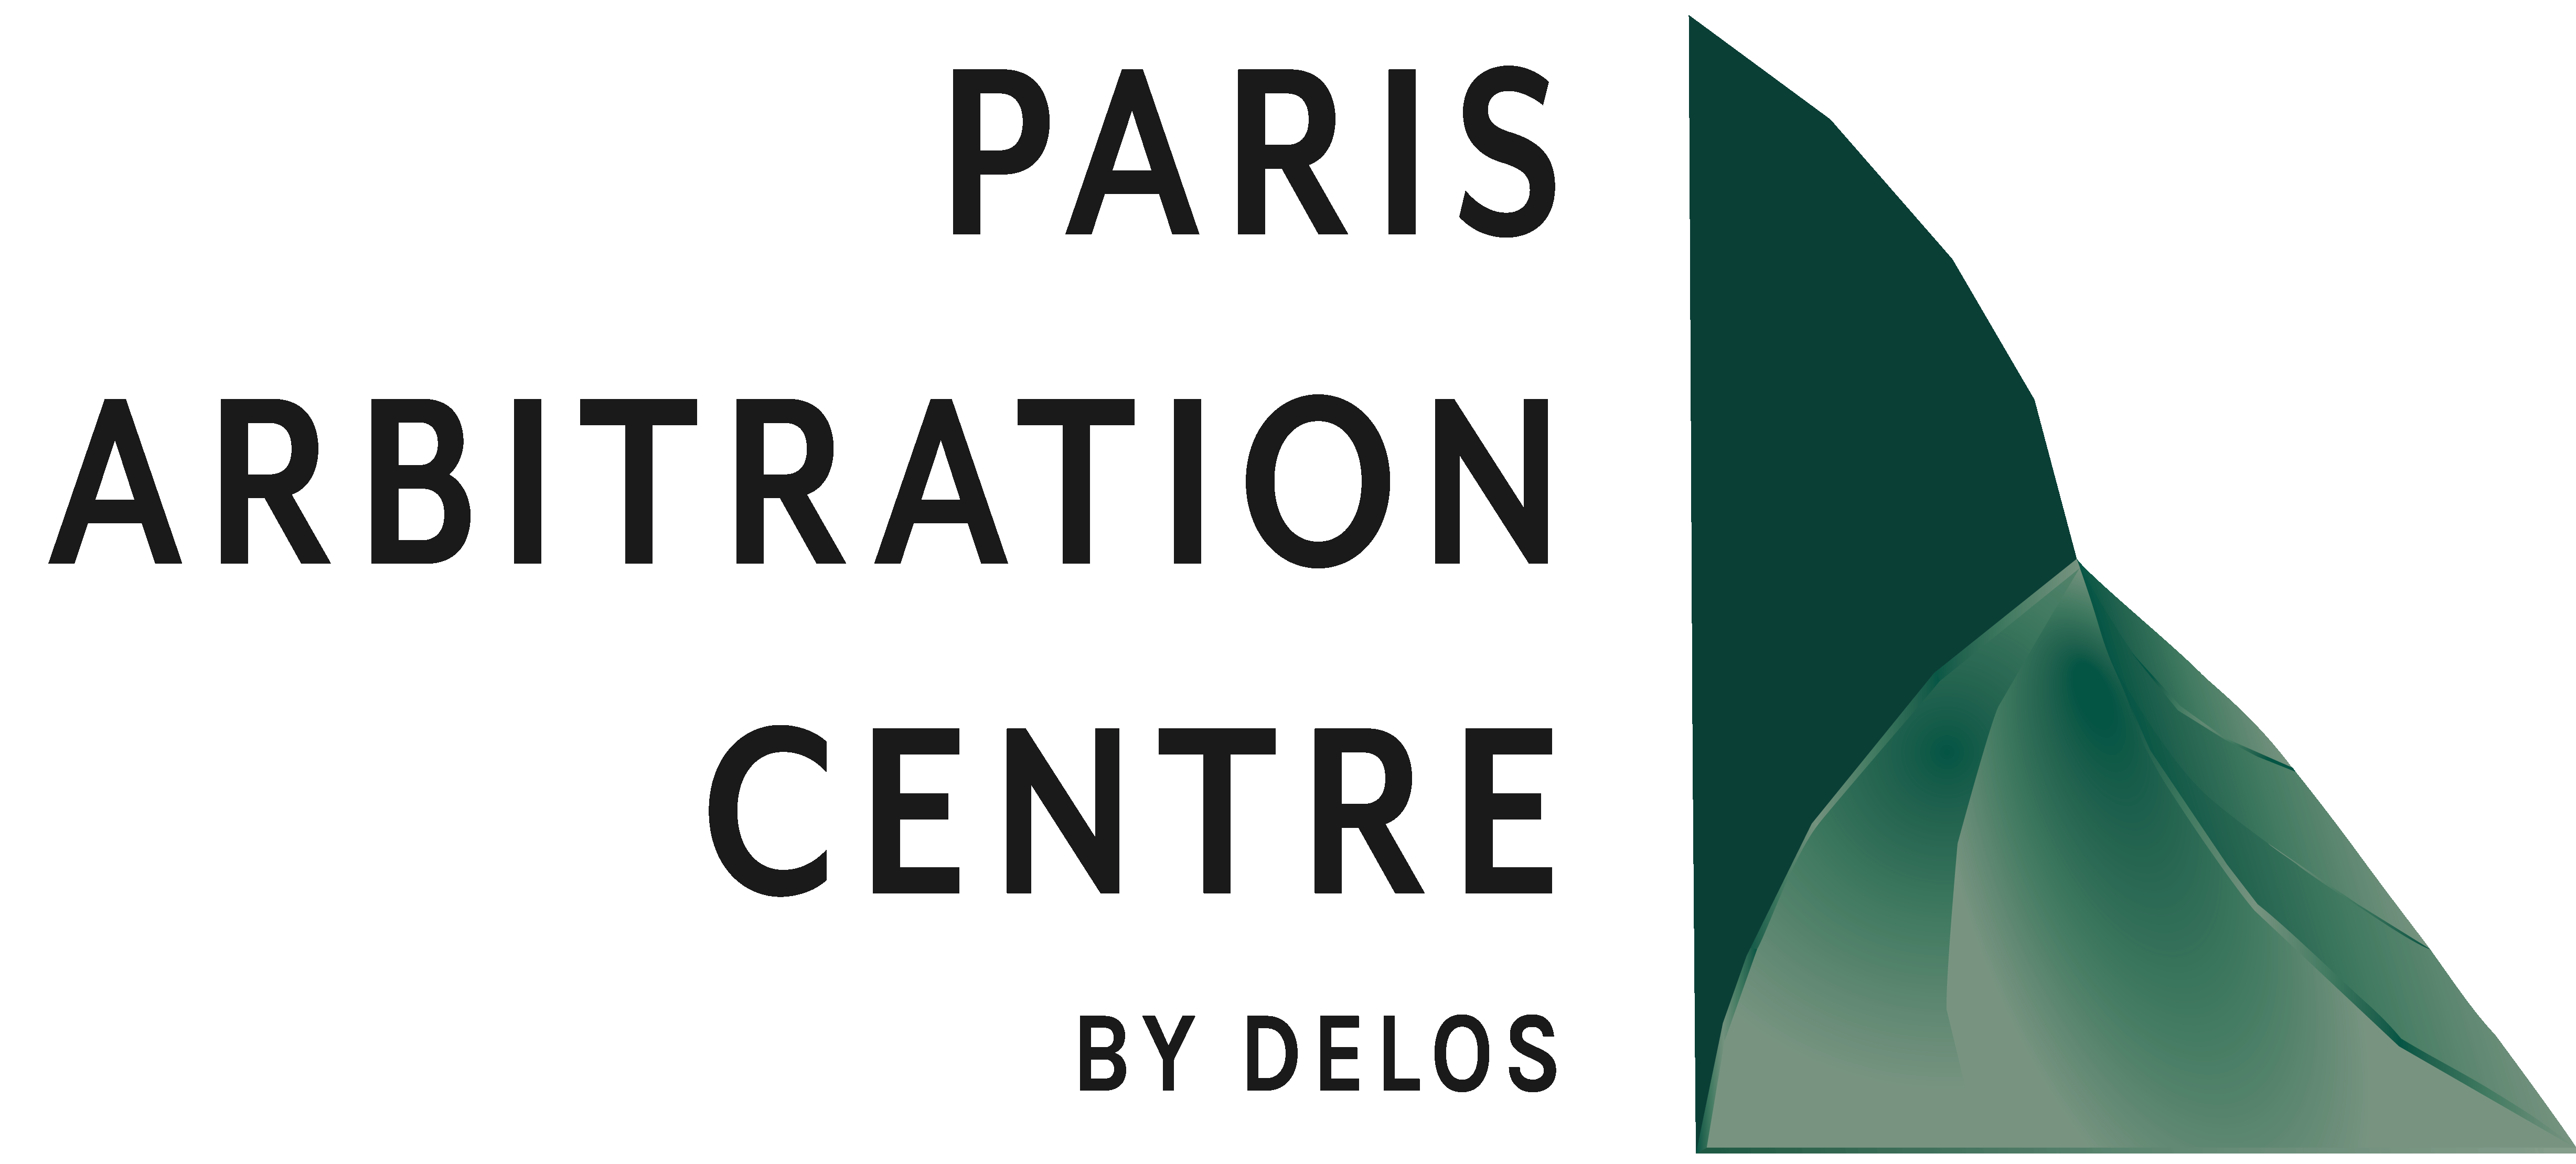 Paris Arbitration Centre, by Delos